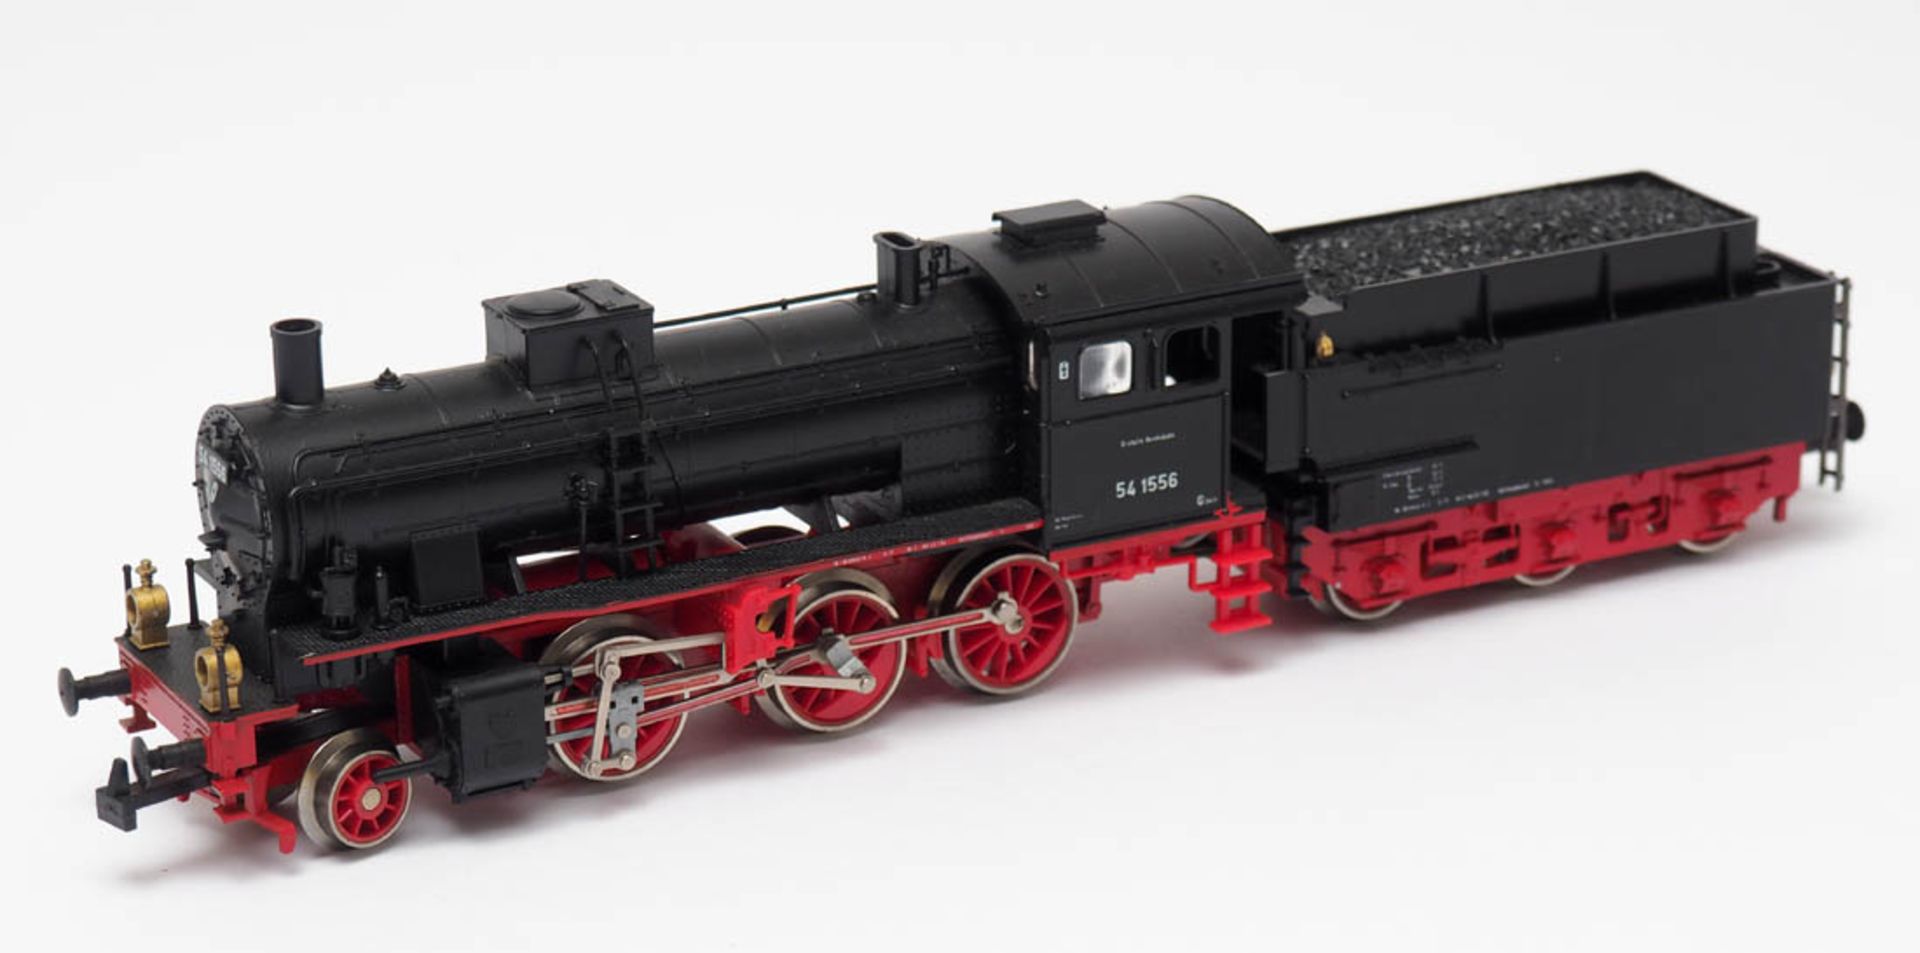 Lokomotive 54 1556, Trix, Spur H0 Im Karton. - Bild 2 aus 2